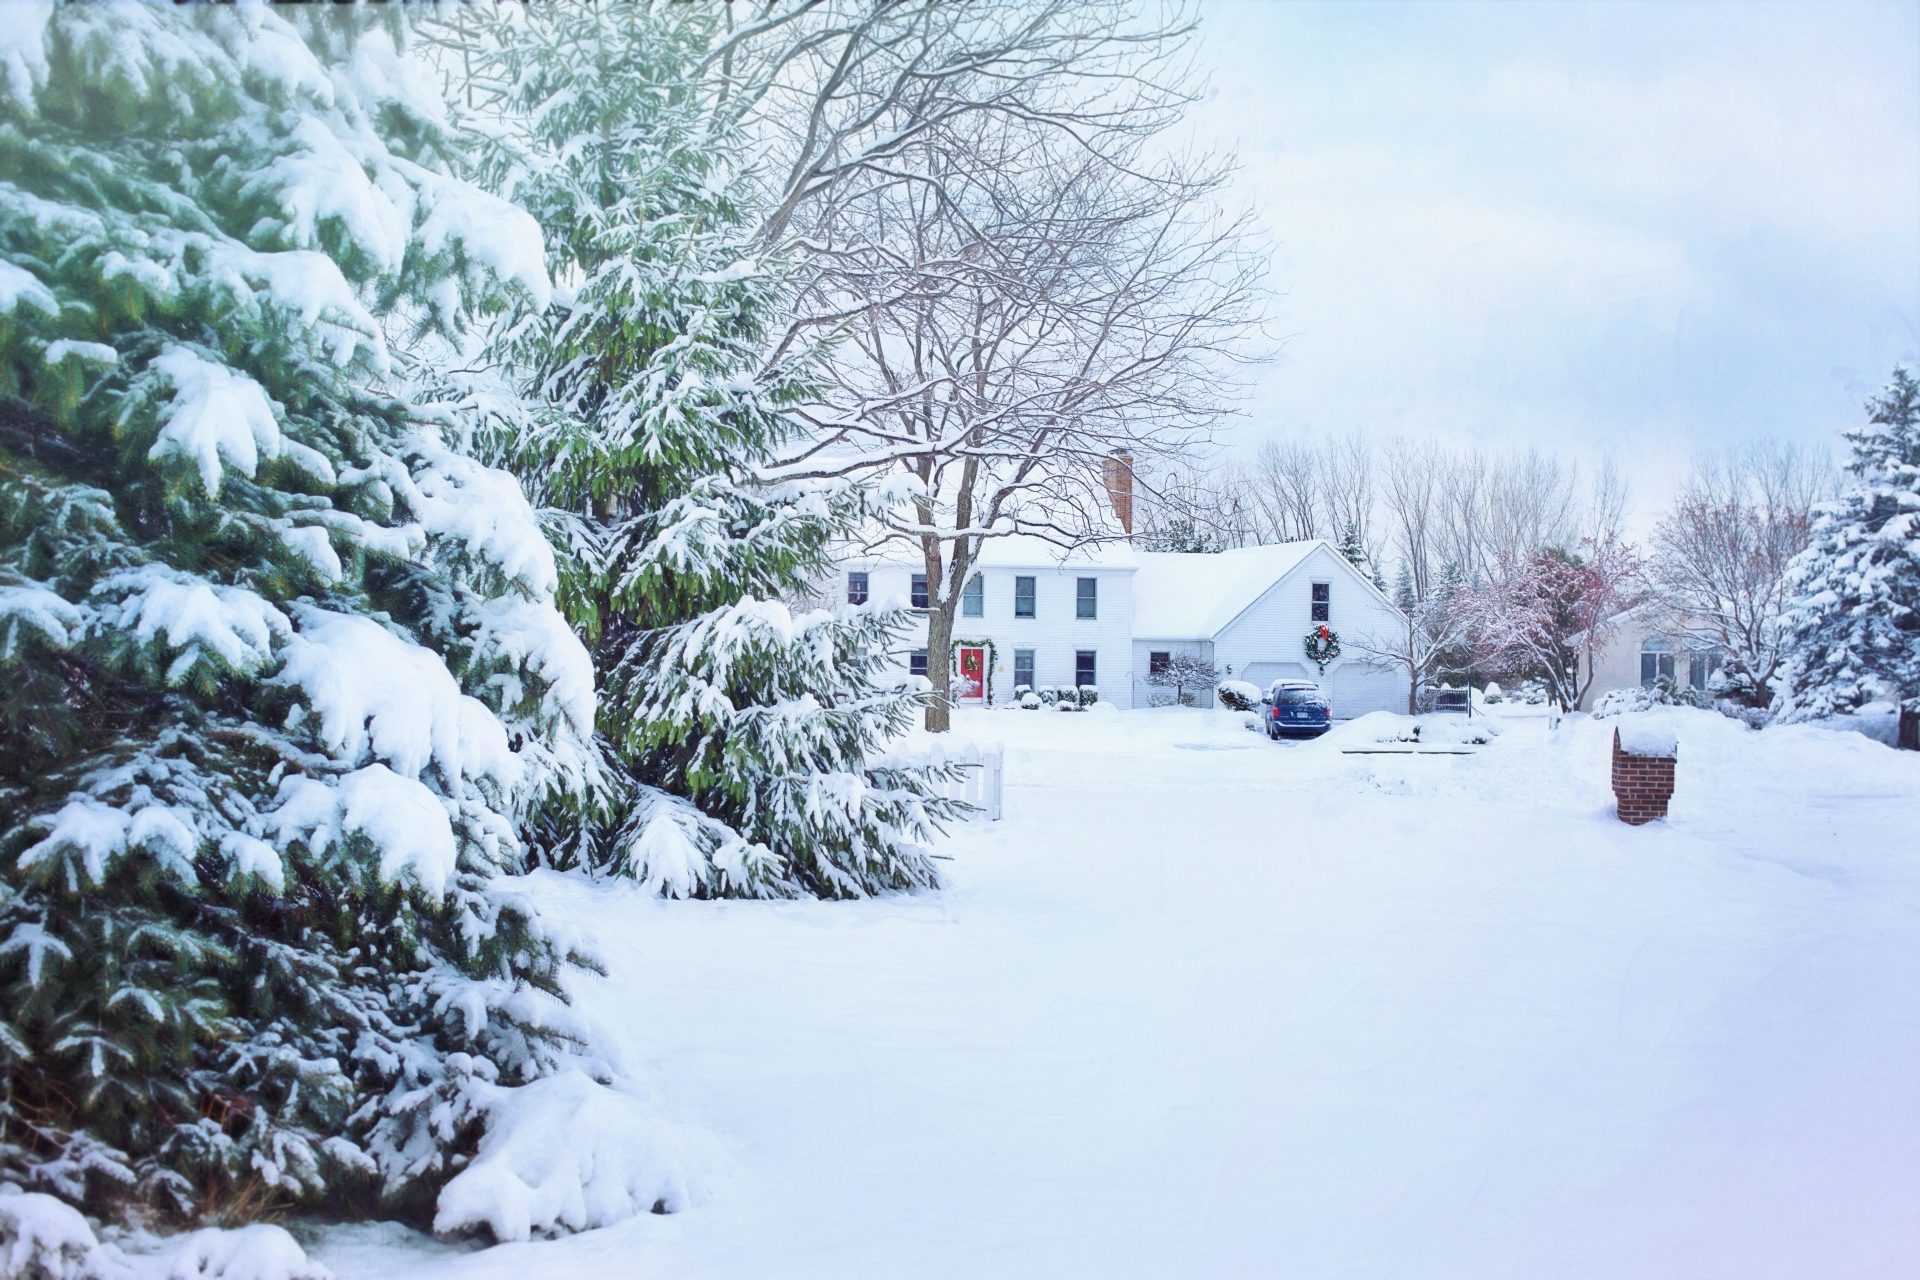 Snow covered neighborhood homes and trees